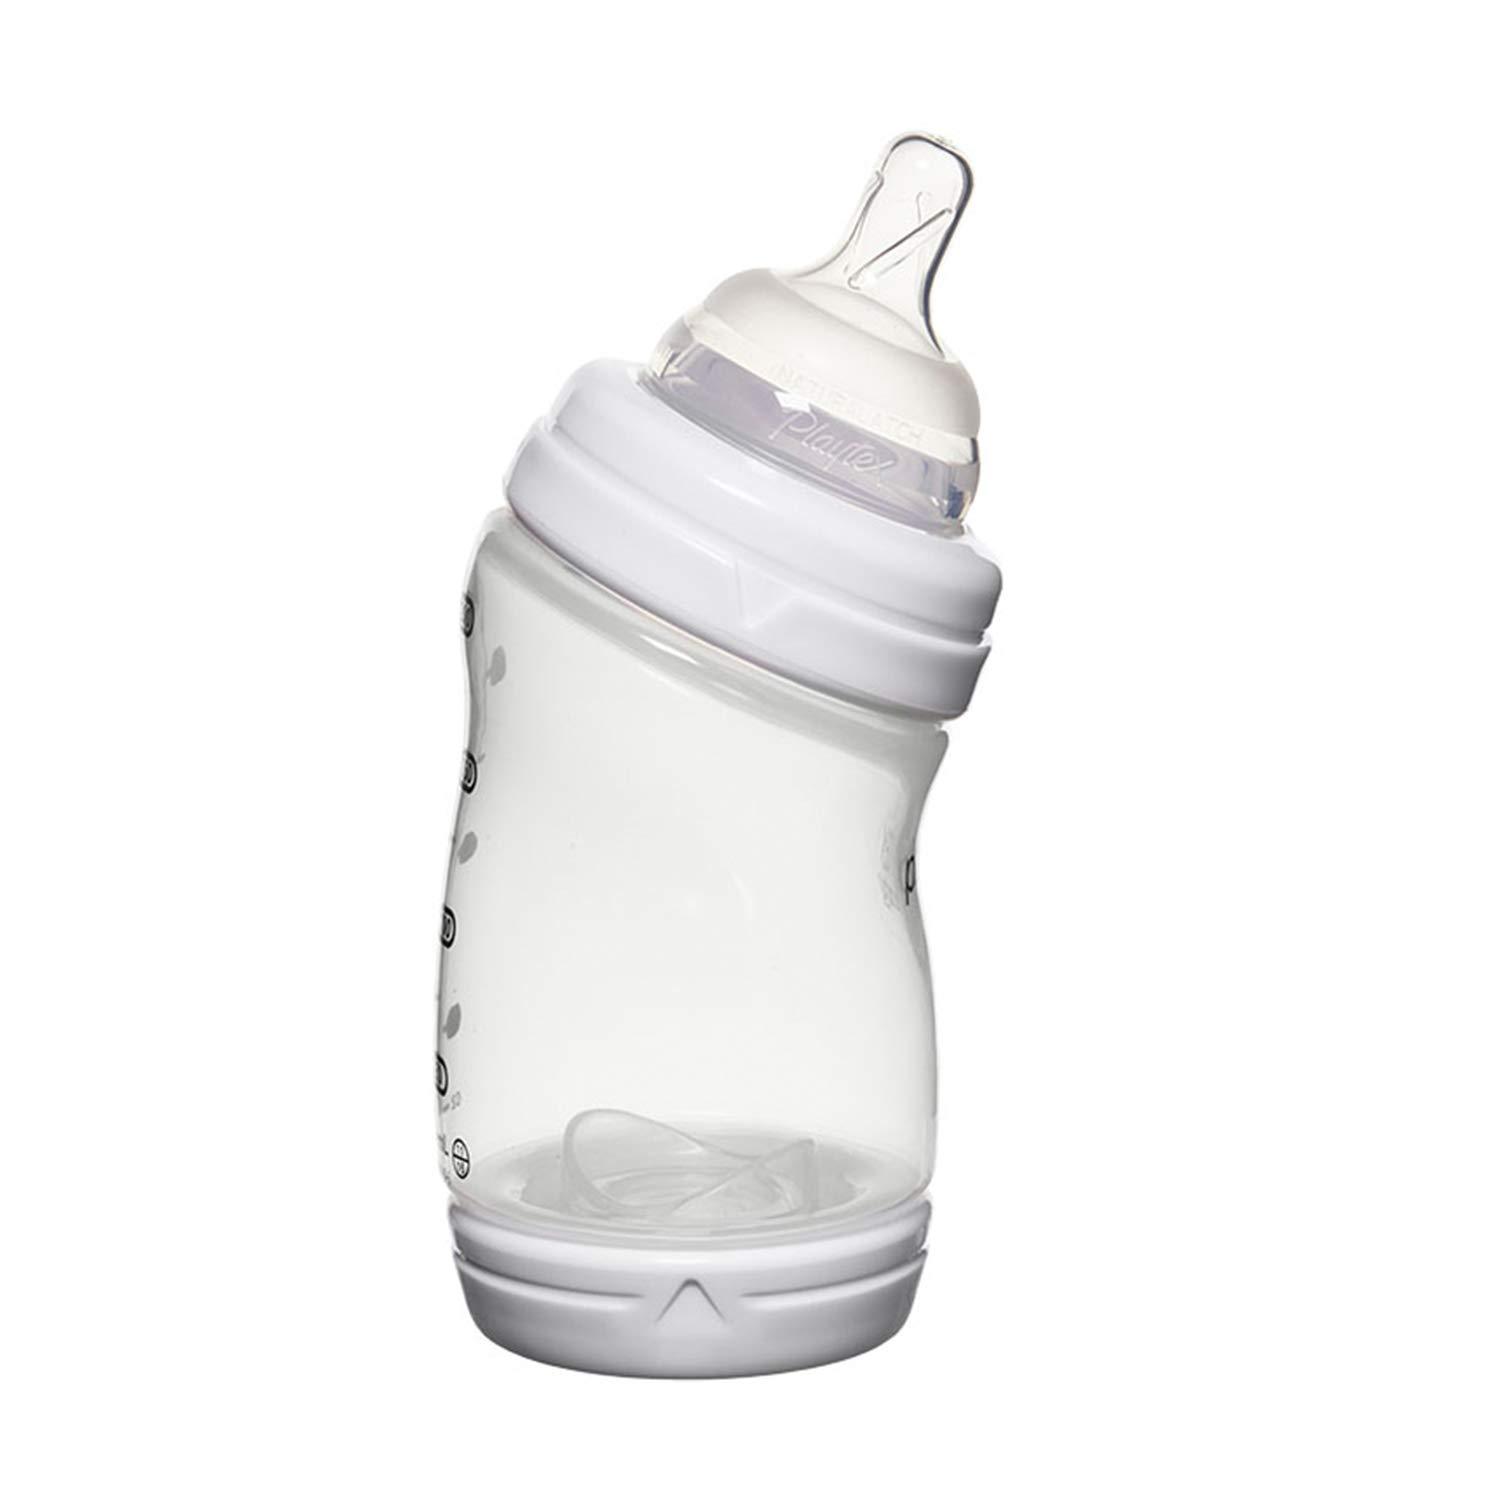 Playtex Vent Air Color Anti-Colic Bottles – Baby Shop Nigeria